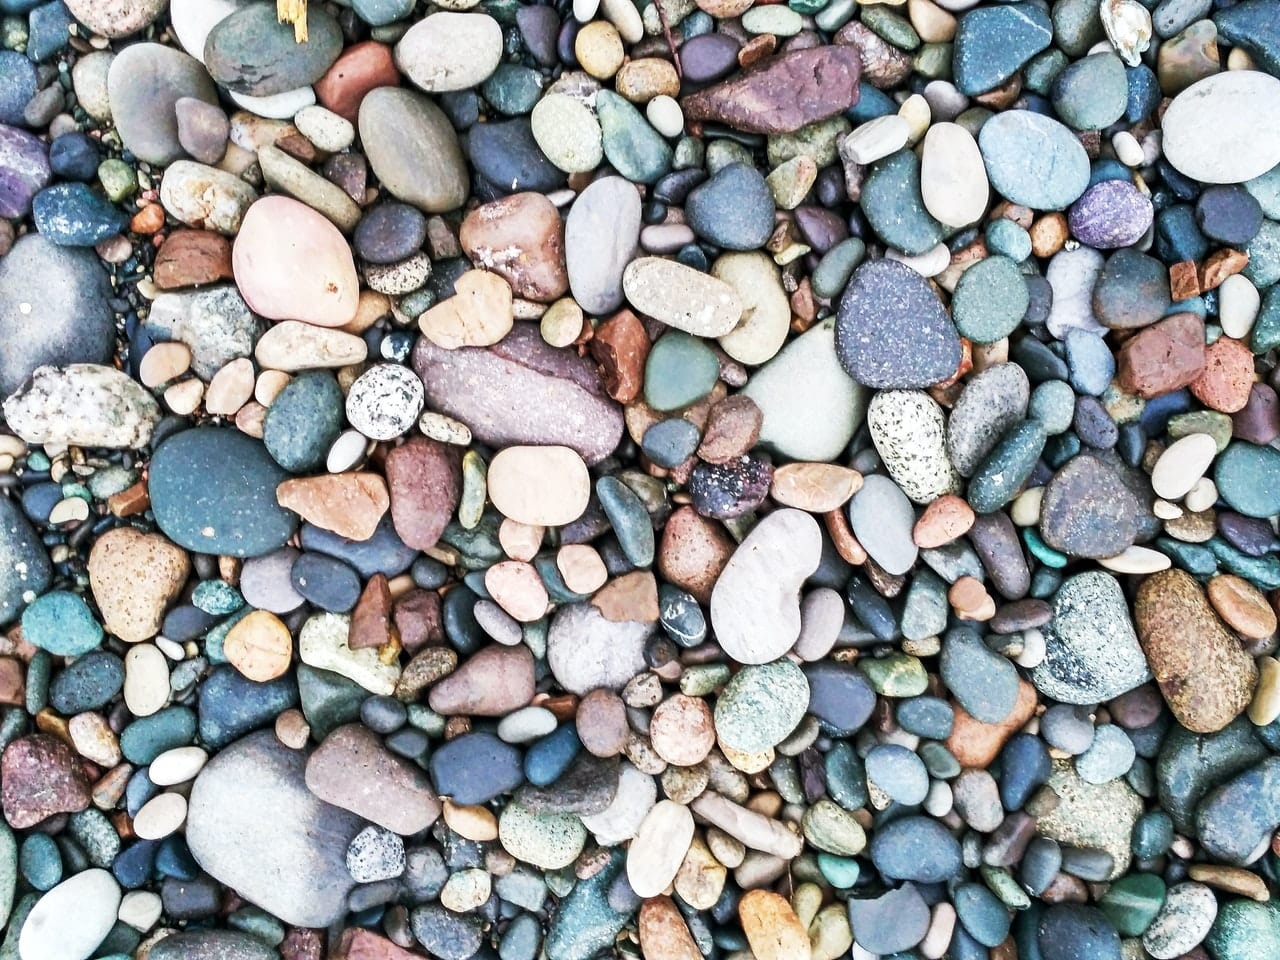 A flat pile of rocks